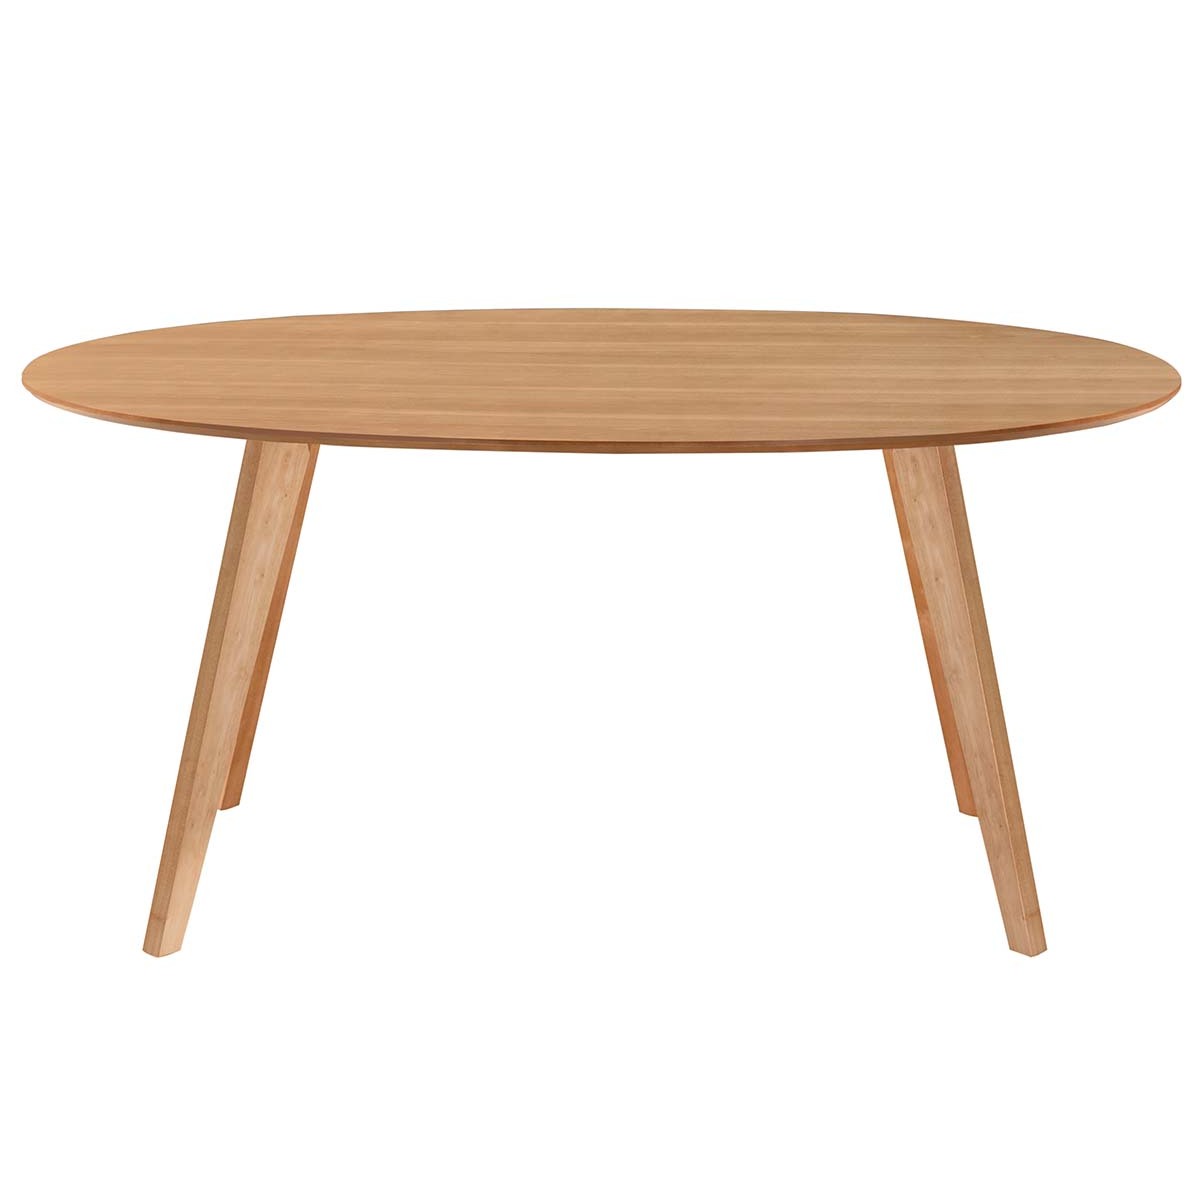 Table à manger design scandinave ovale chêne L160 cm MARIK vue1